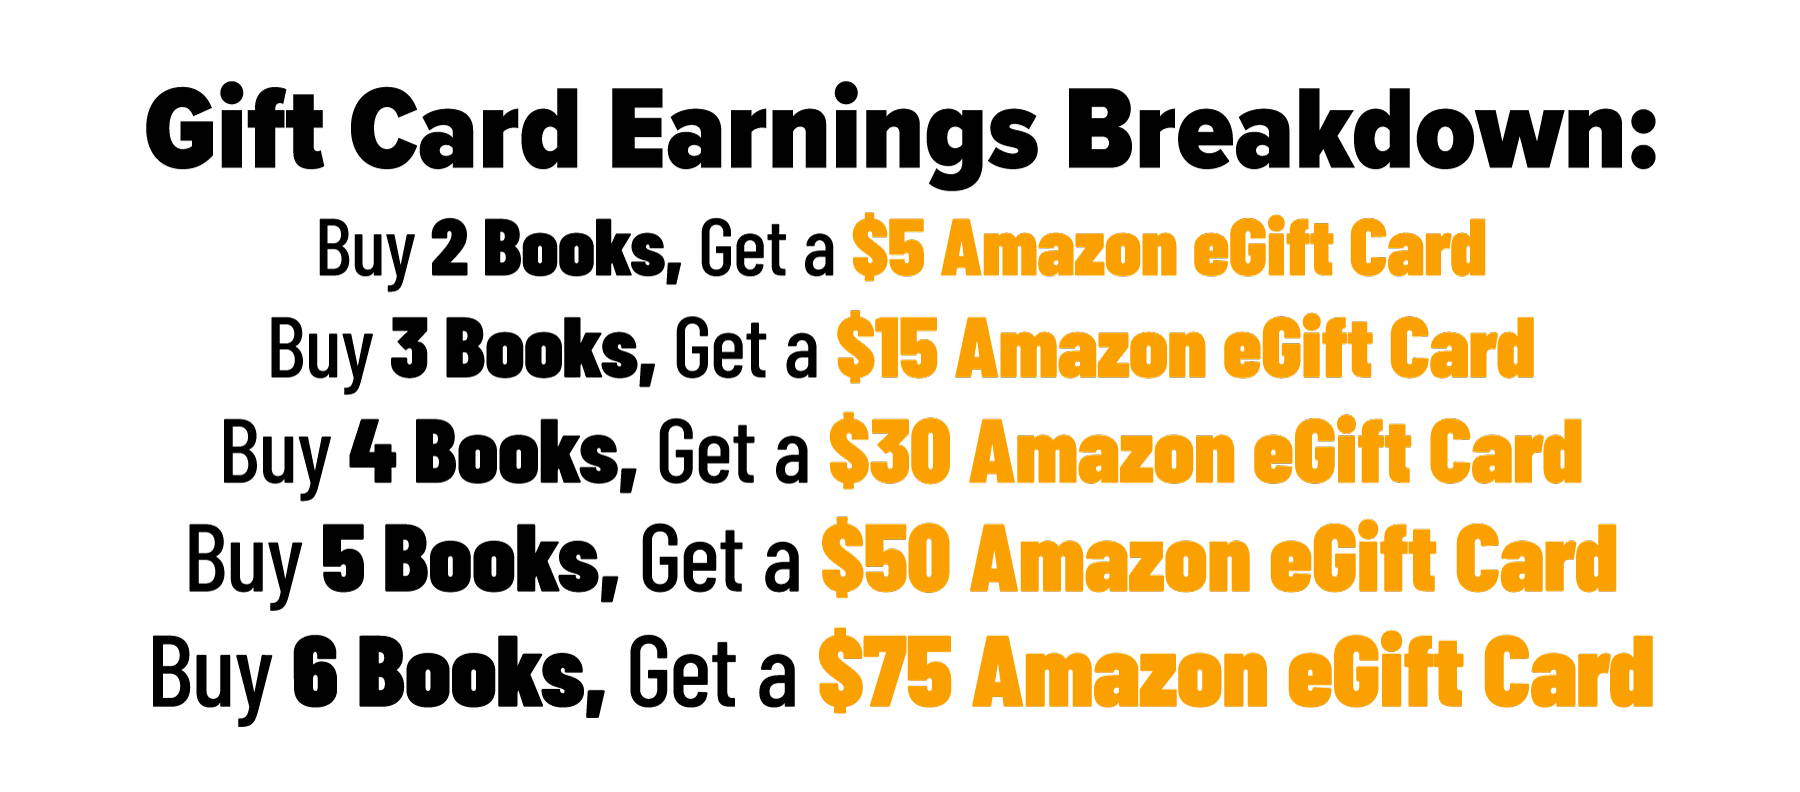 Gift Card Earnings Breakdown: Buy 2 Books, Get a $10 Amazon eGift Card. Buy 3 Books, Get a $20 Amazon eGift Card. Buy 4 Books, Get a $35 Amazon eGift Card. Buy 5 Books, Get a $50 Amazon eGift Card. Buy 6 Books, Get a $75 Amazon eGift Card.